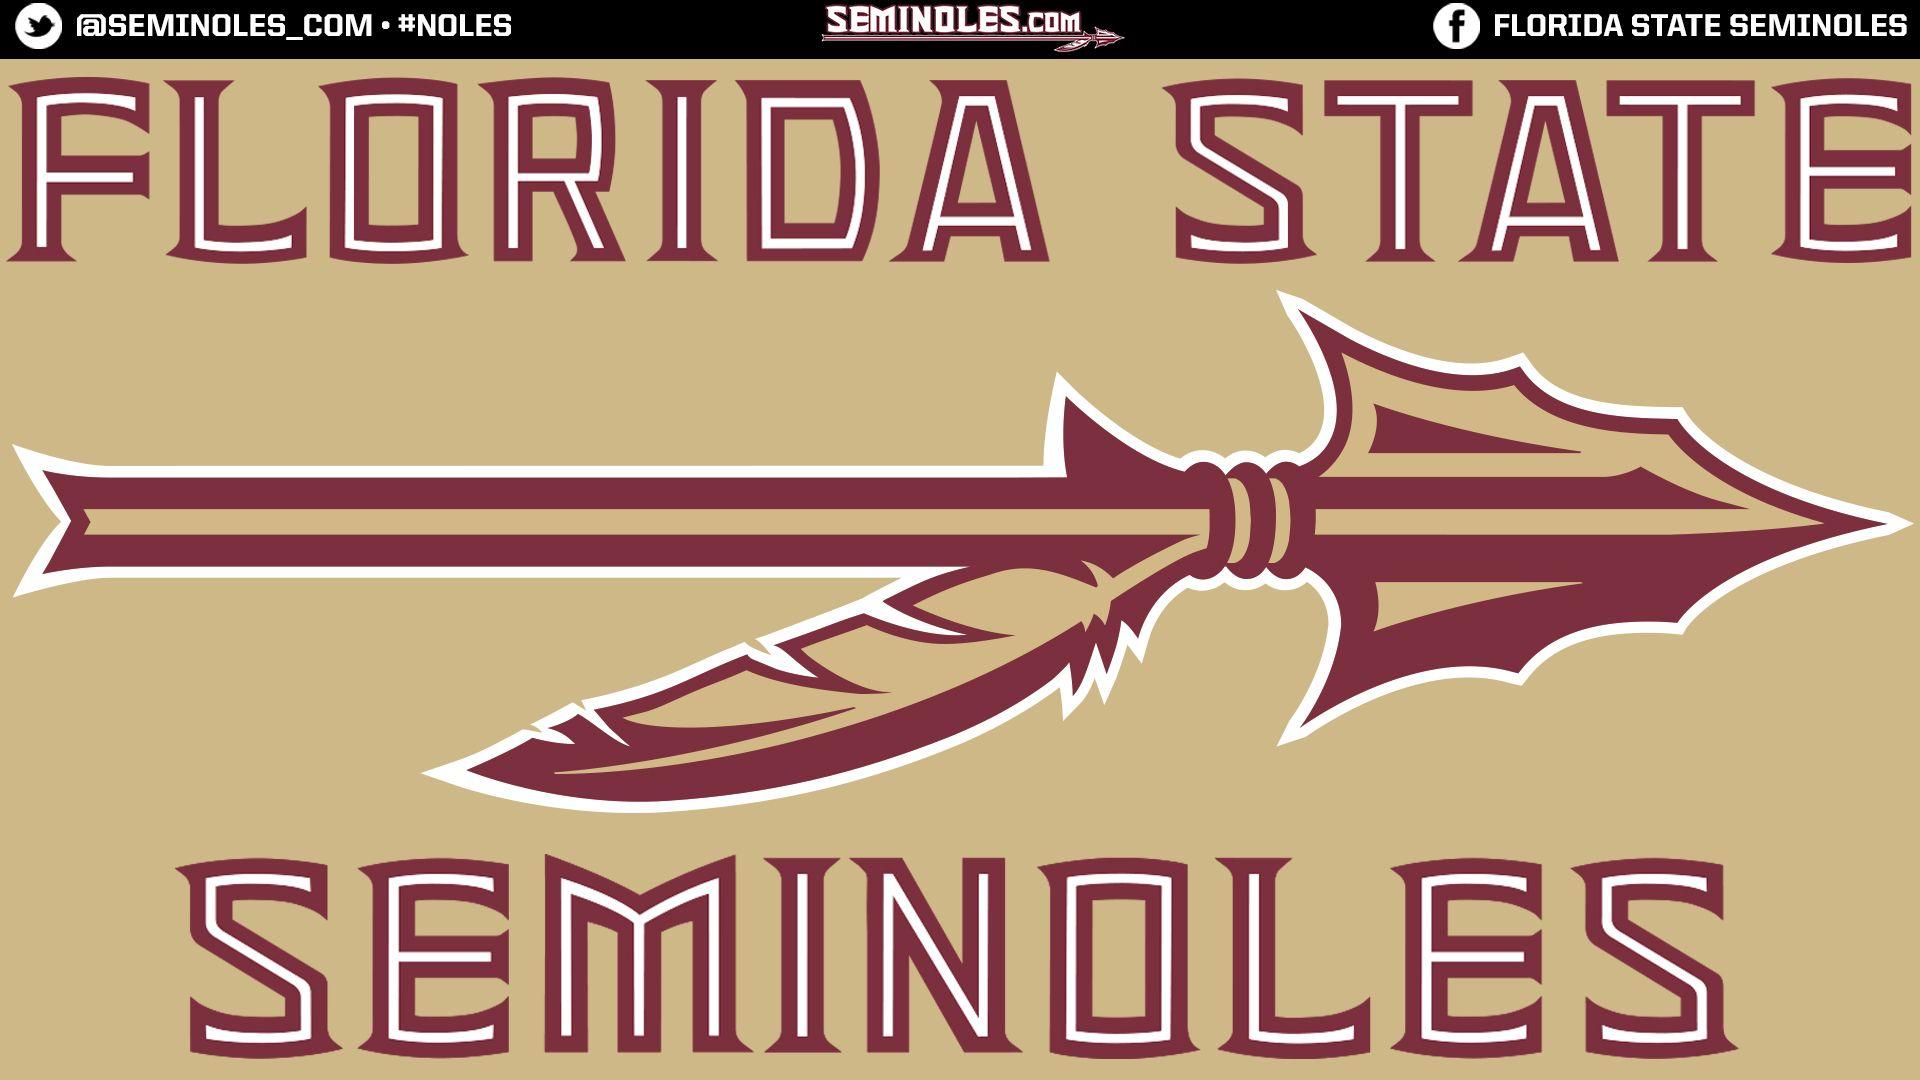 Florida State Seminoles New Logo - Seminoles.com Desktop Wallpaper